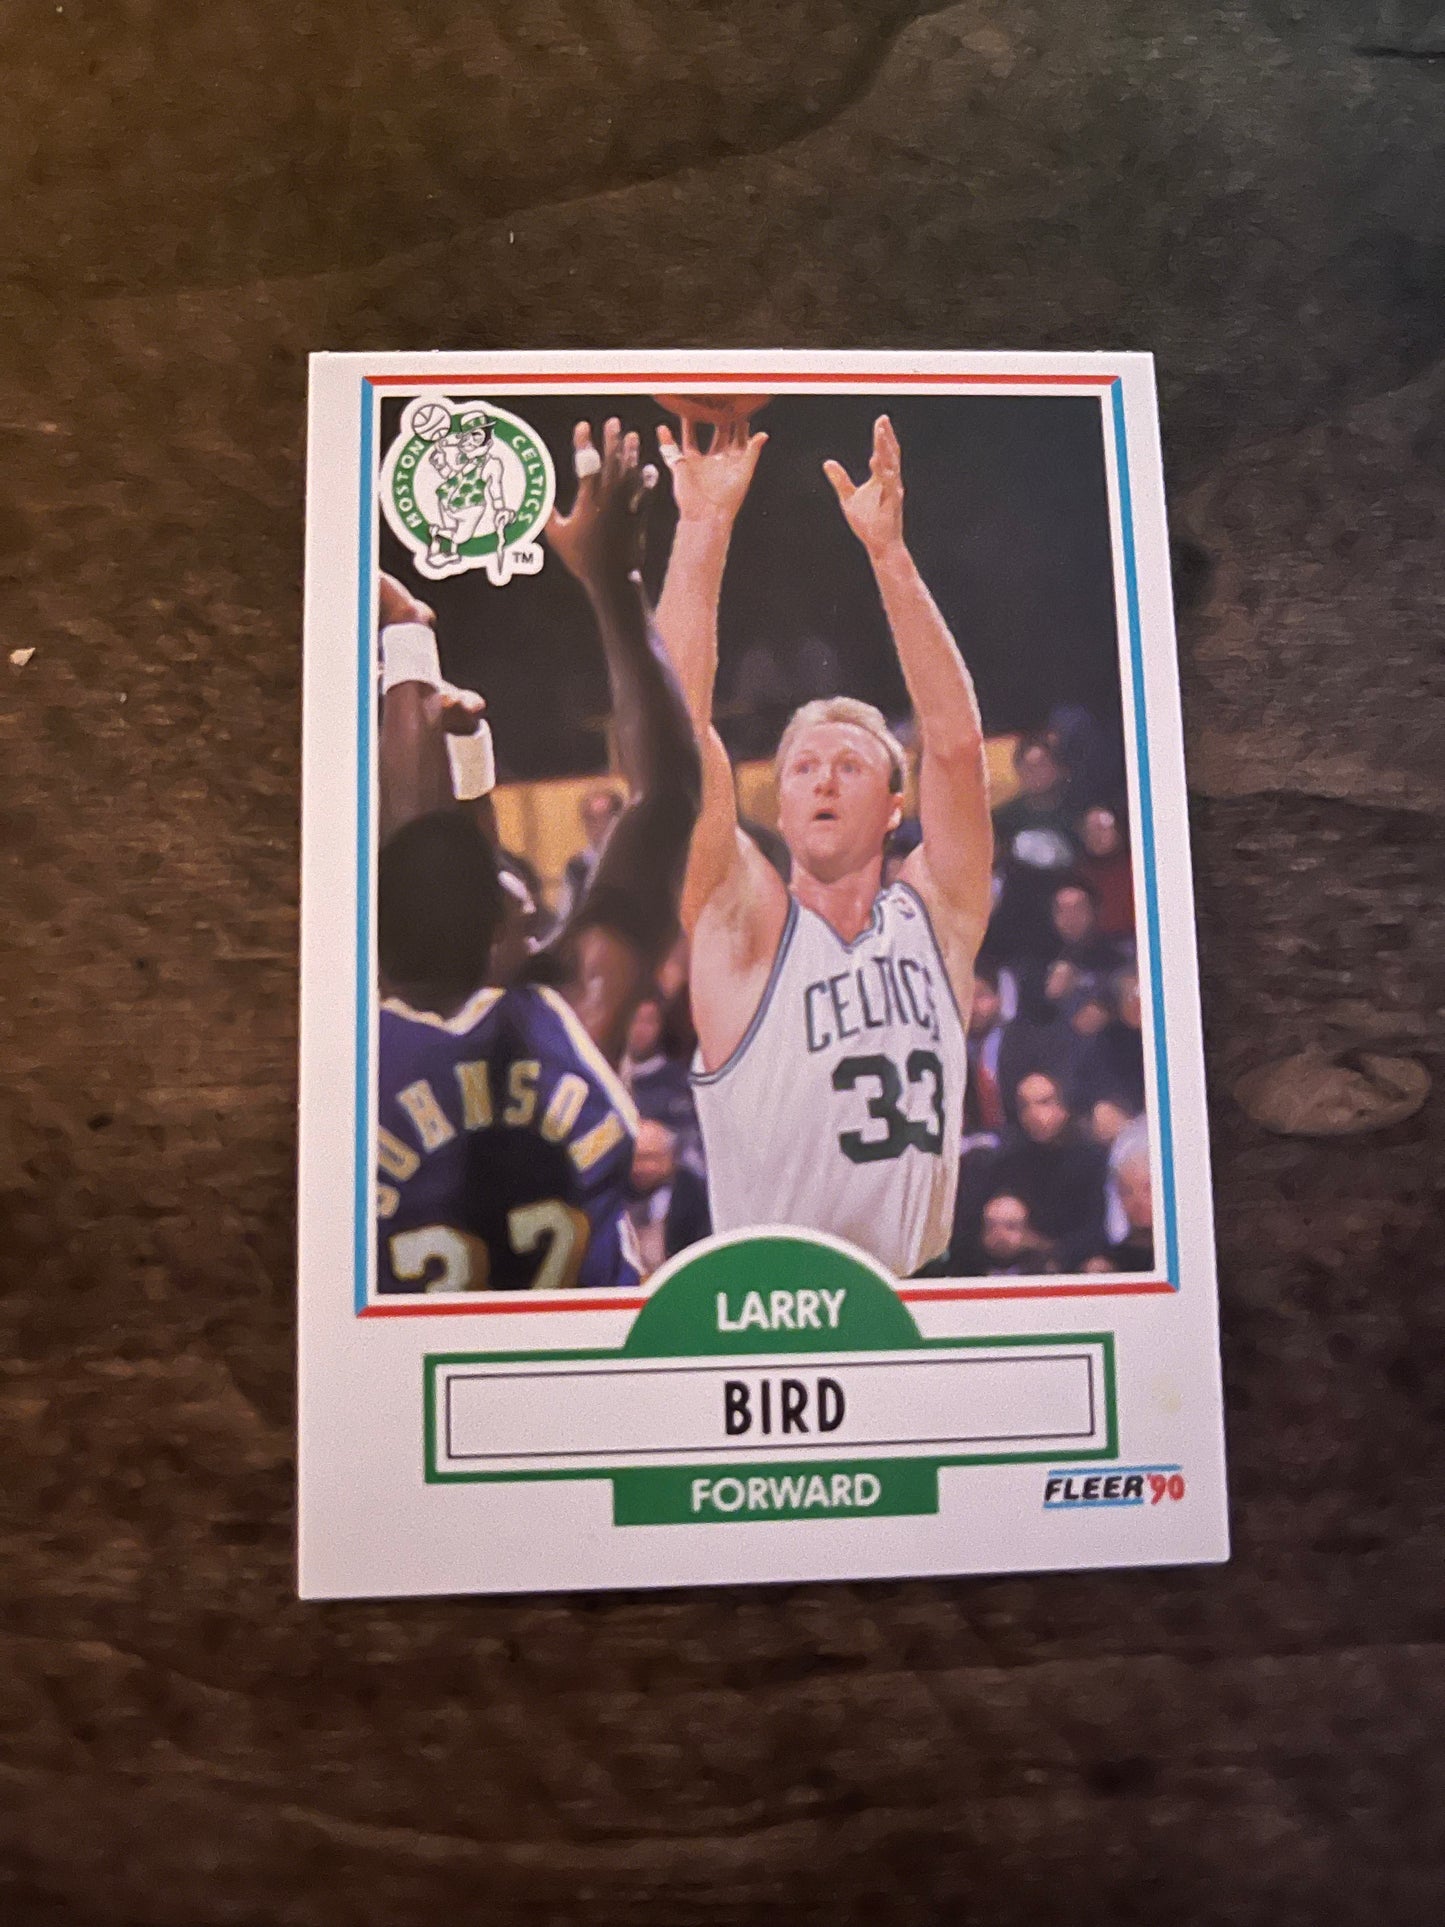 NEW GIRL: Nick Miller's Mint Condition Larry Bird 1990 Fleer Basketball Card